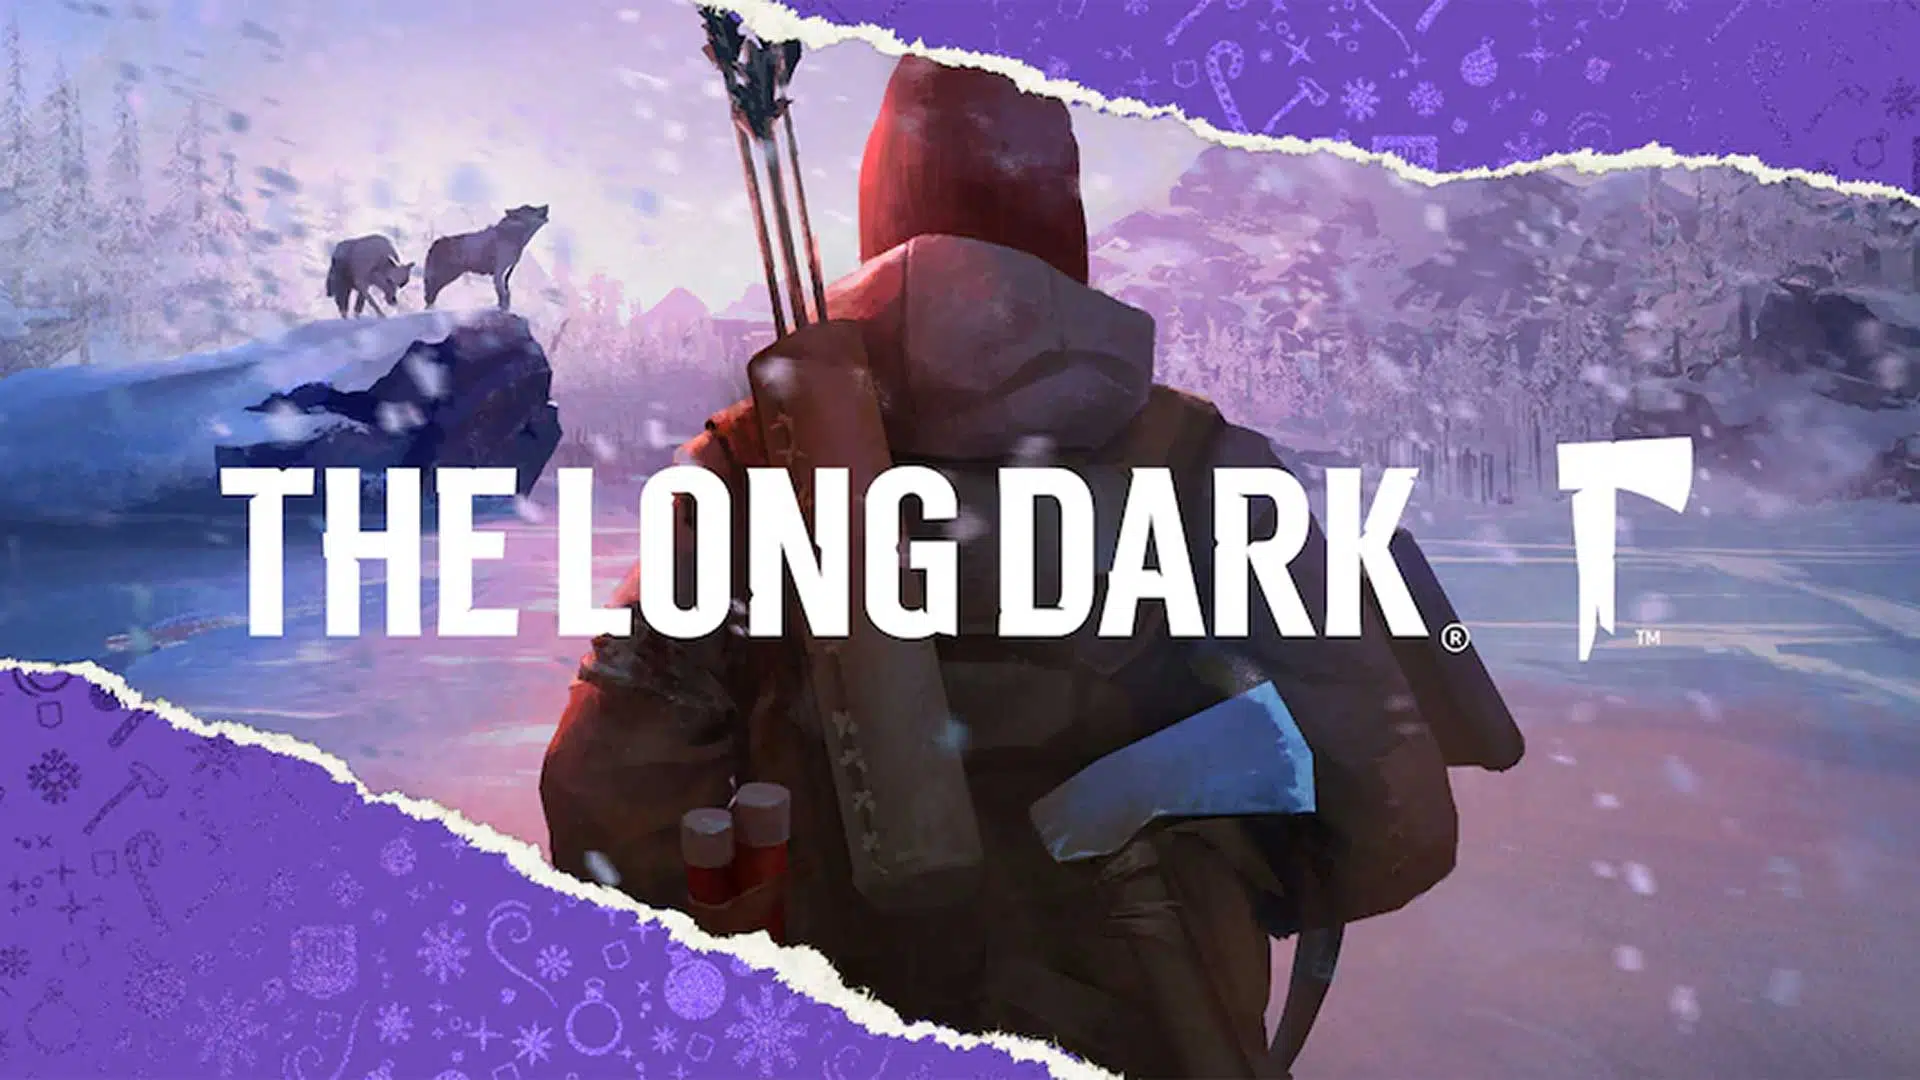 the long dark egs free game